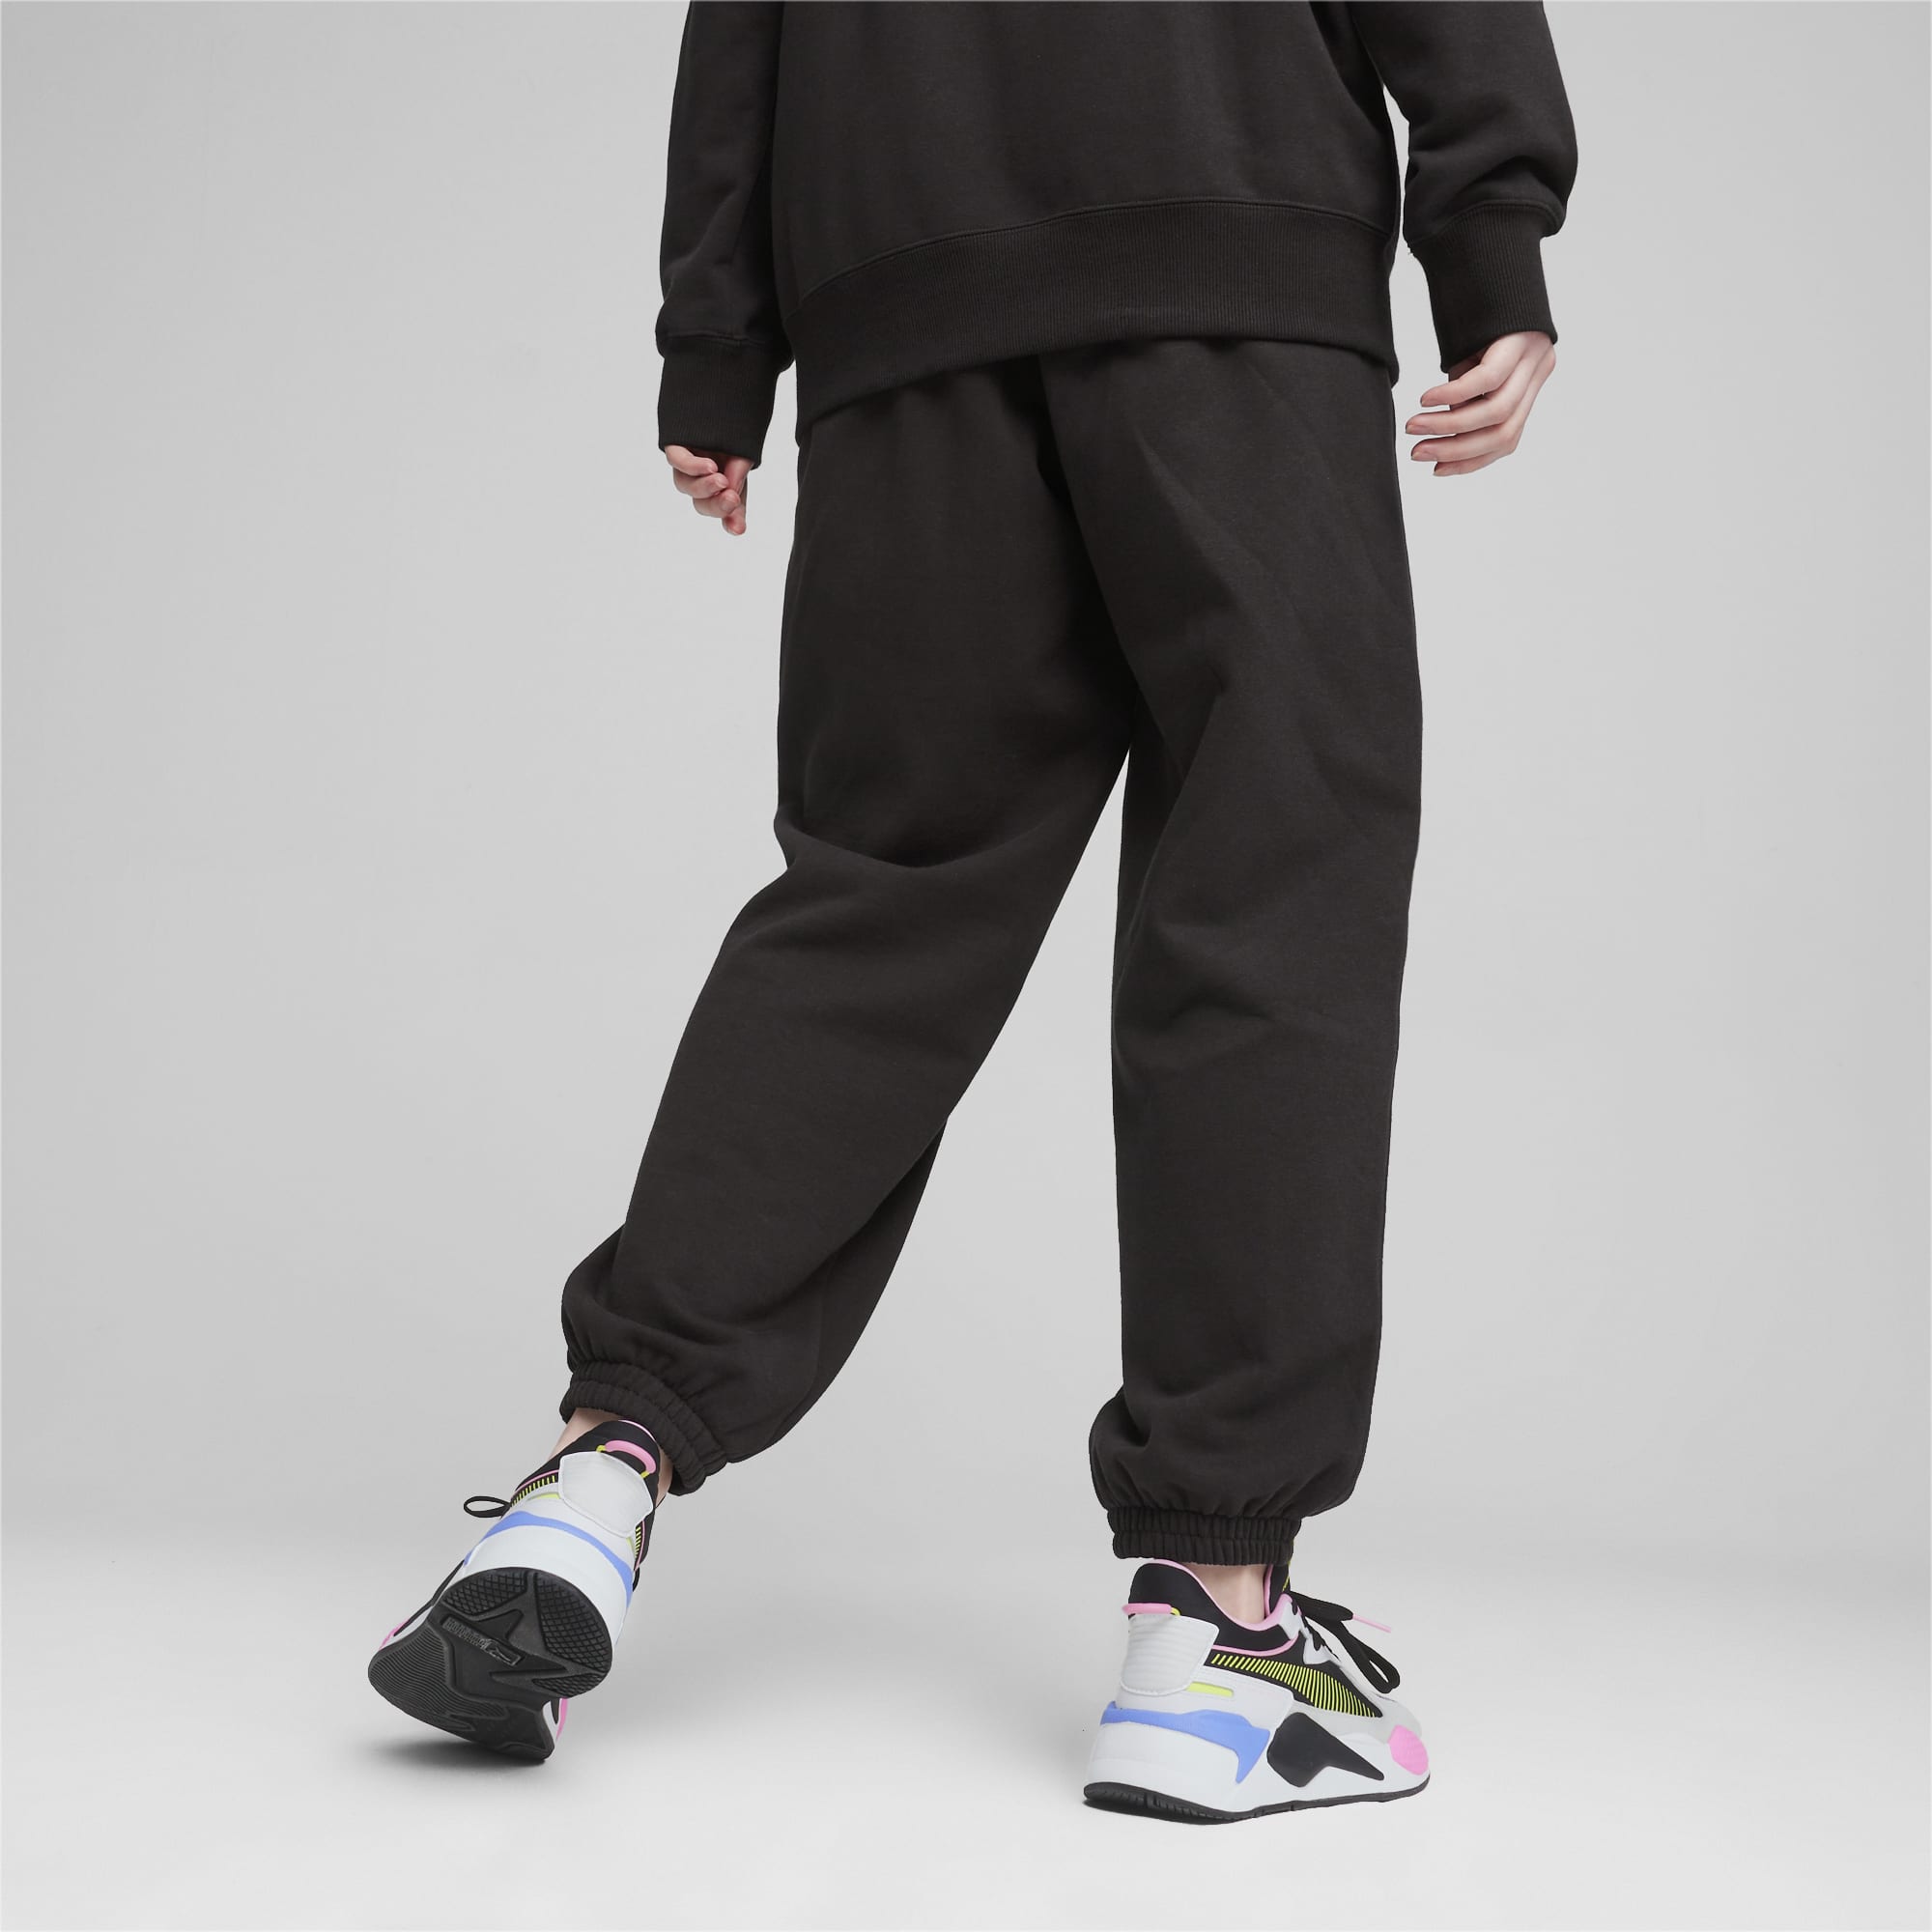 Nike Sweatpants Womens L Dark Grey Baggy Fit Black Swoosh